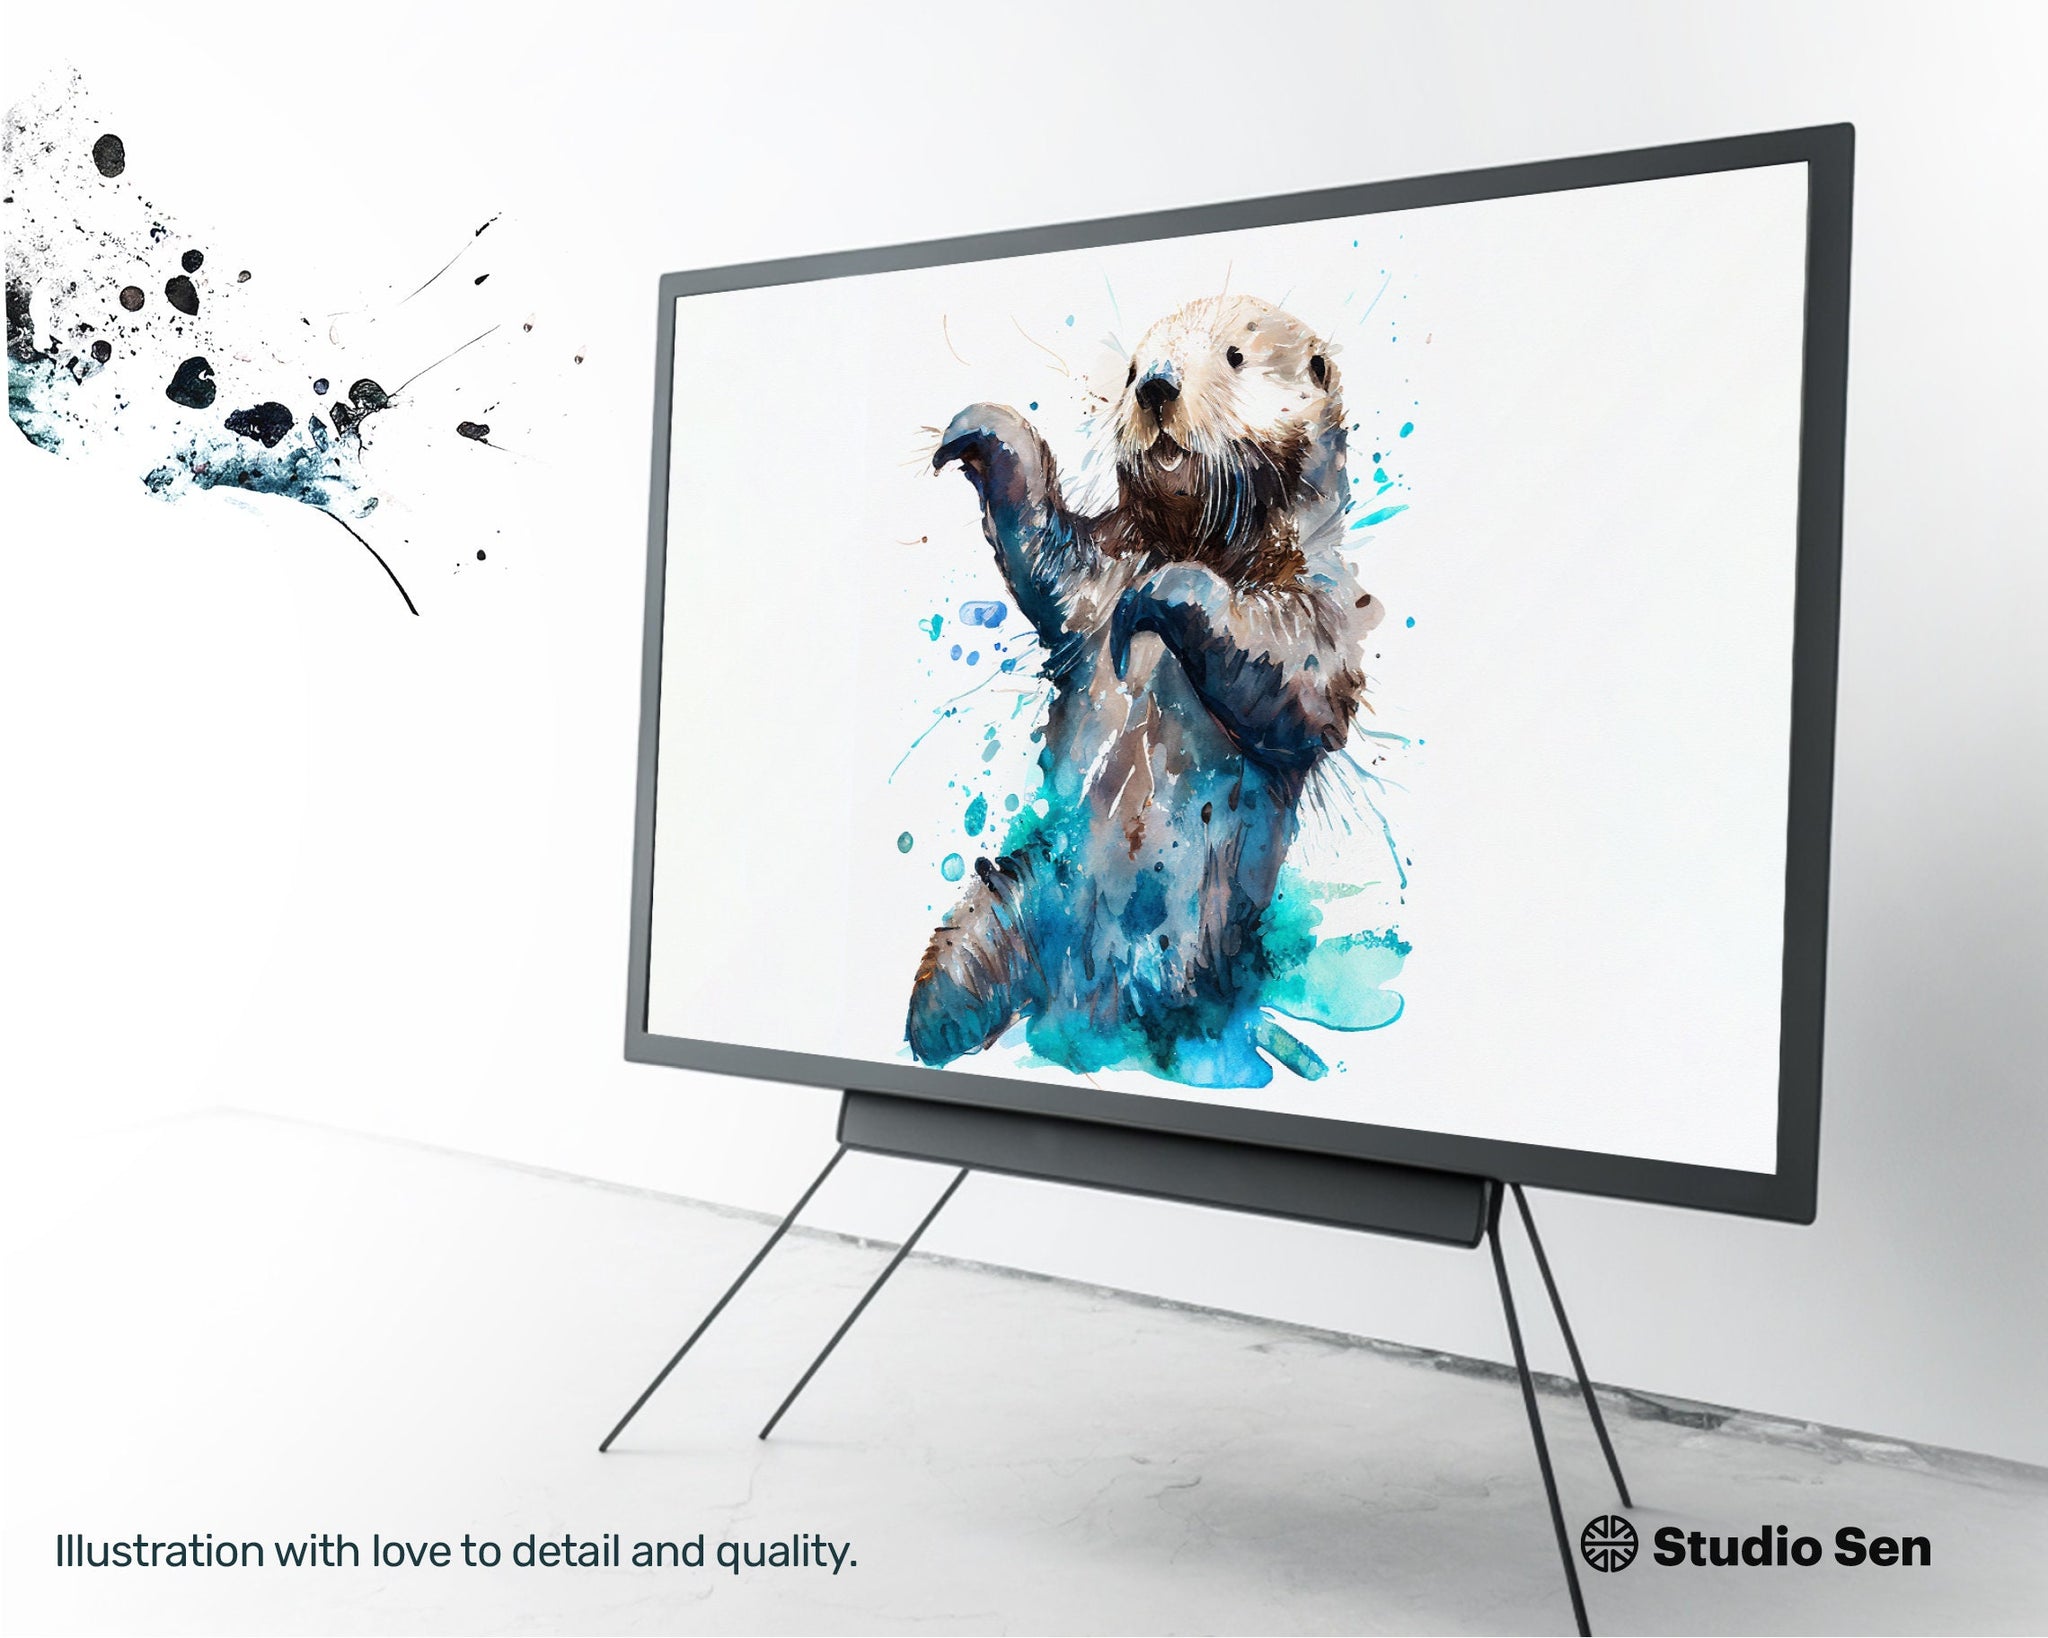 Samsung Art TV, Dab Otter, premium download, drops and splashes, friendly wallpaper, art for kids